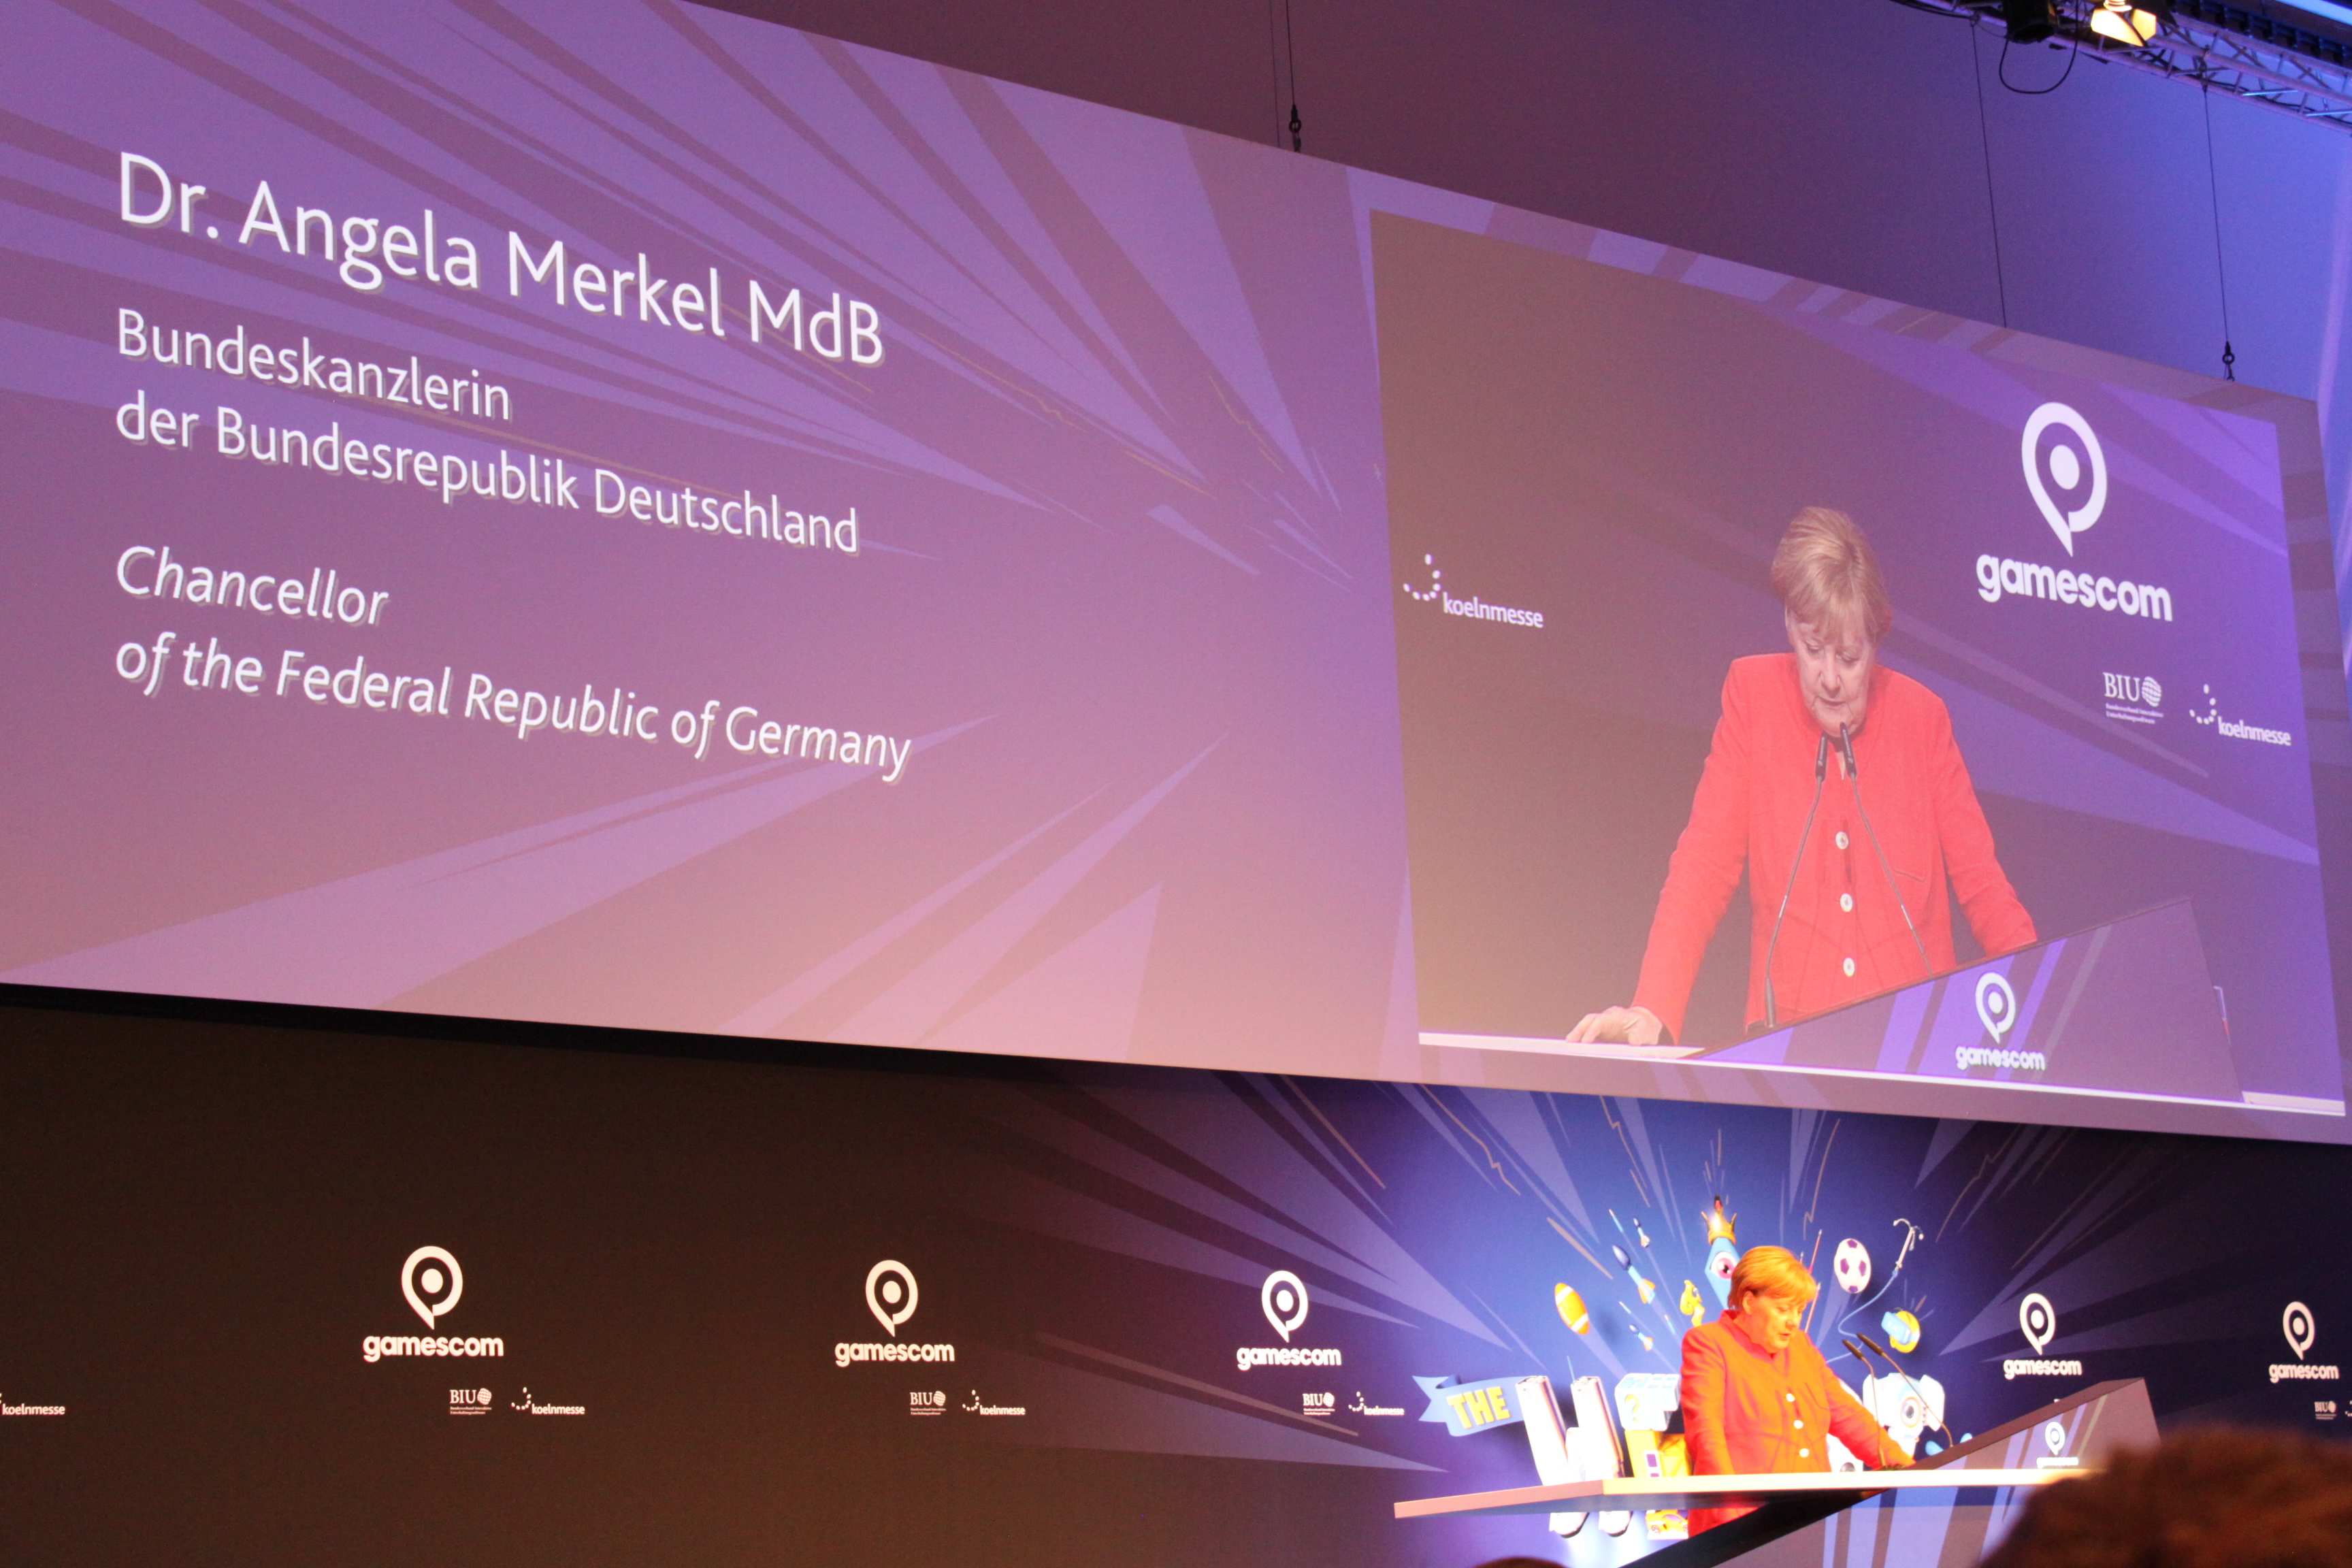 Gamescom_Angela Merkel